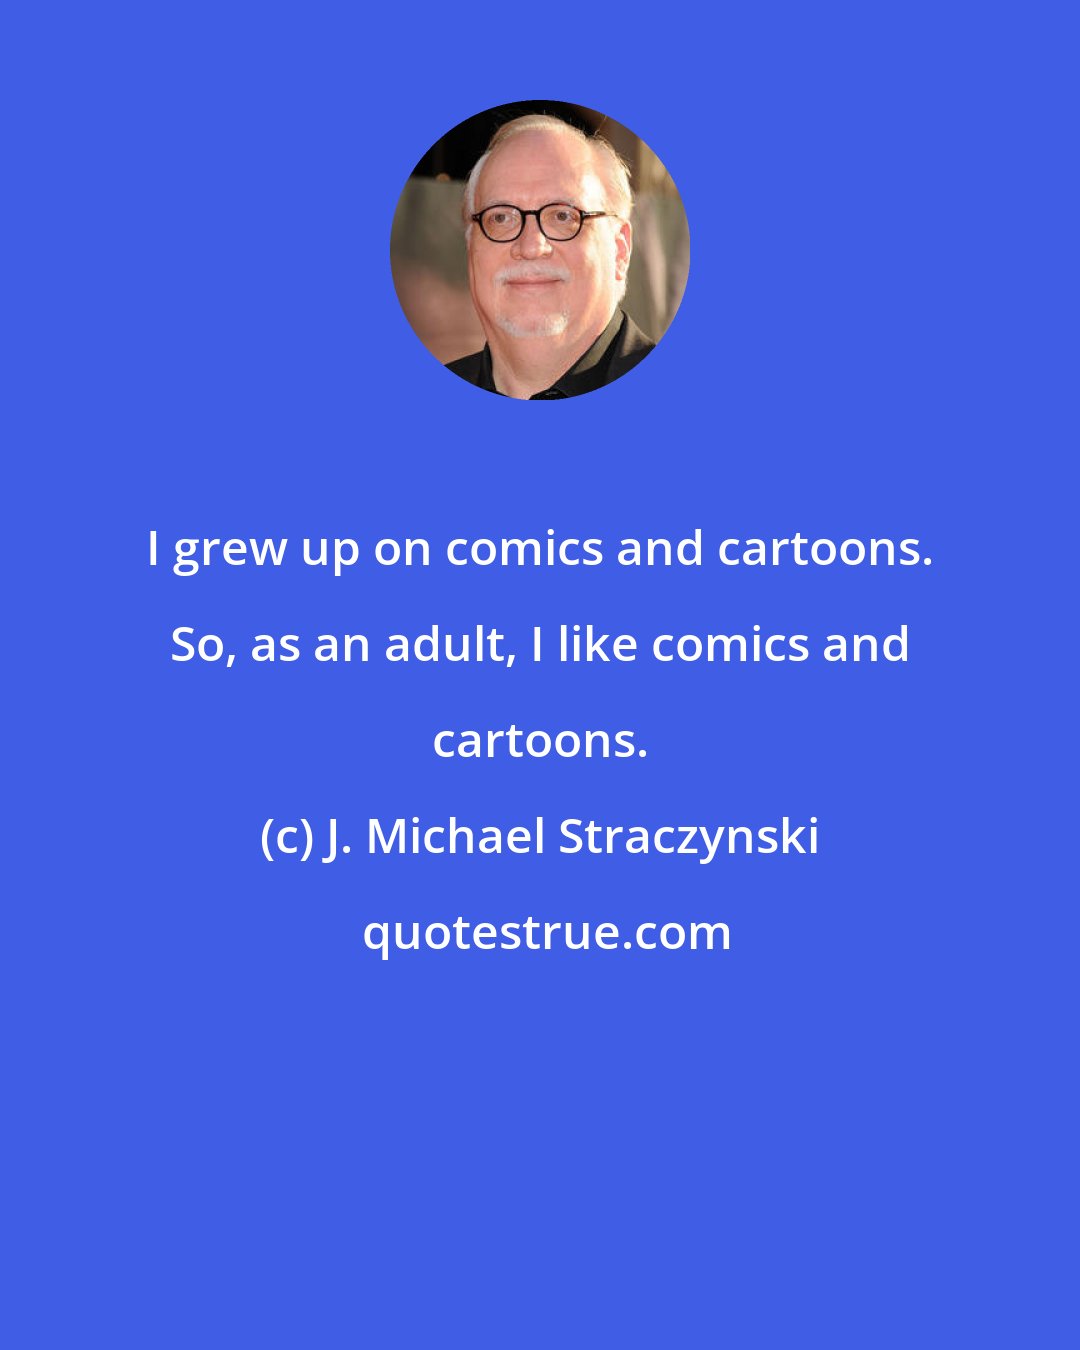 J. Michael Straczynski: I grew up on comics and cartoons. So, as an adult, I like comics and cartoons.